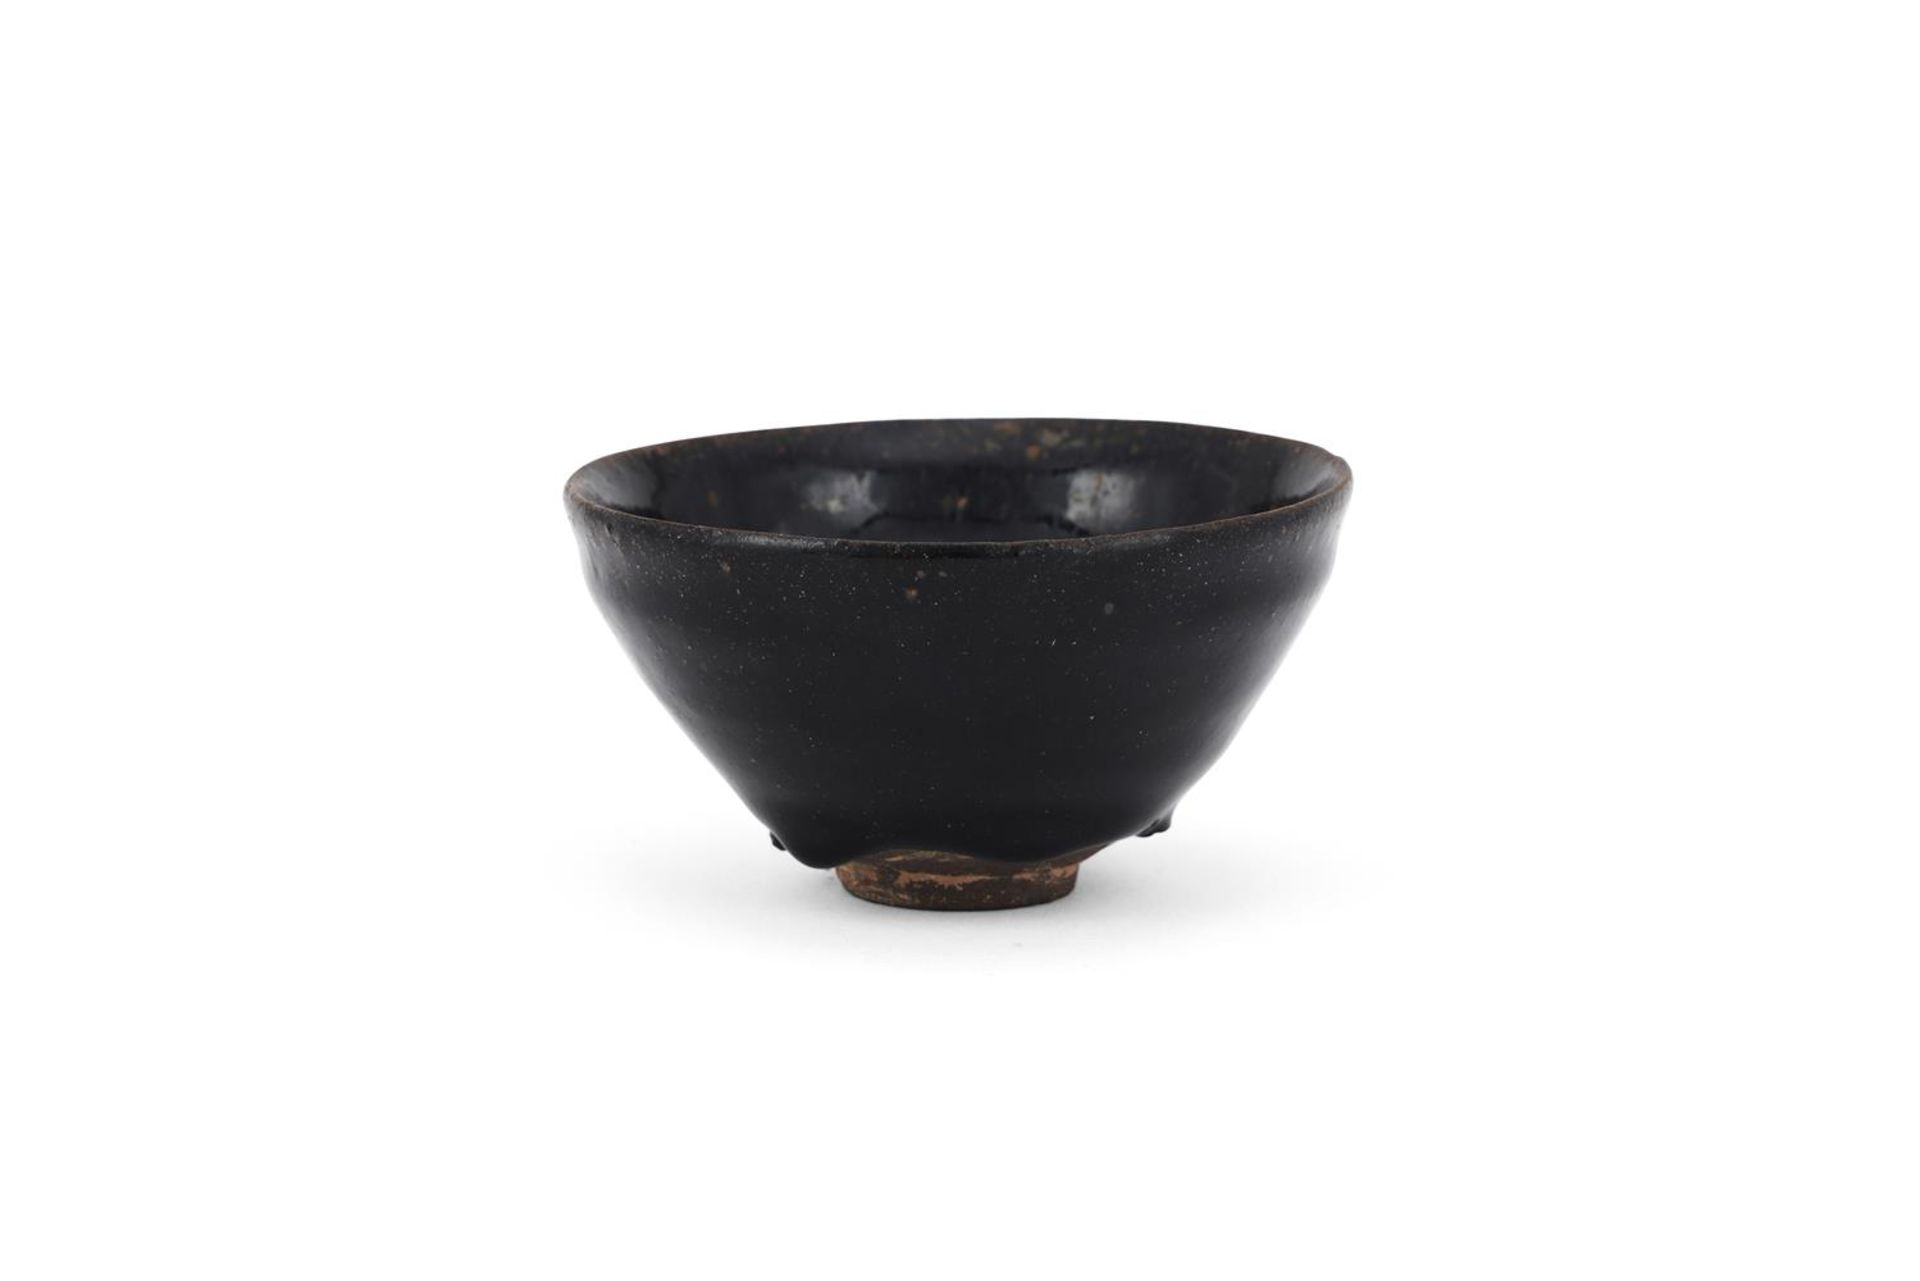 A Chinese Jian-type black tea bowl